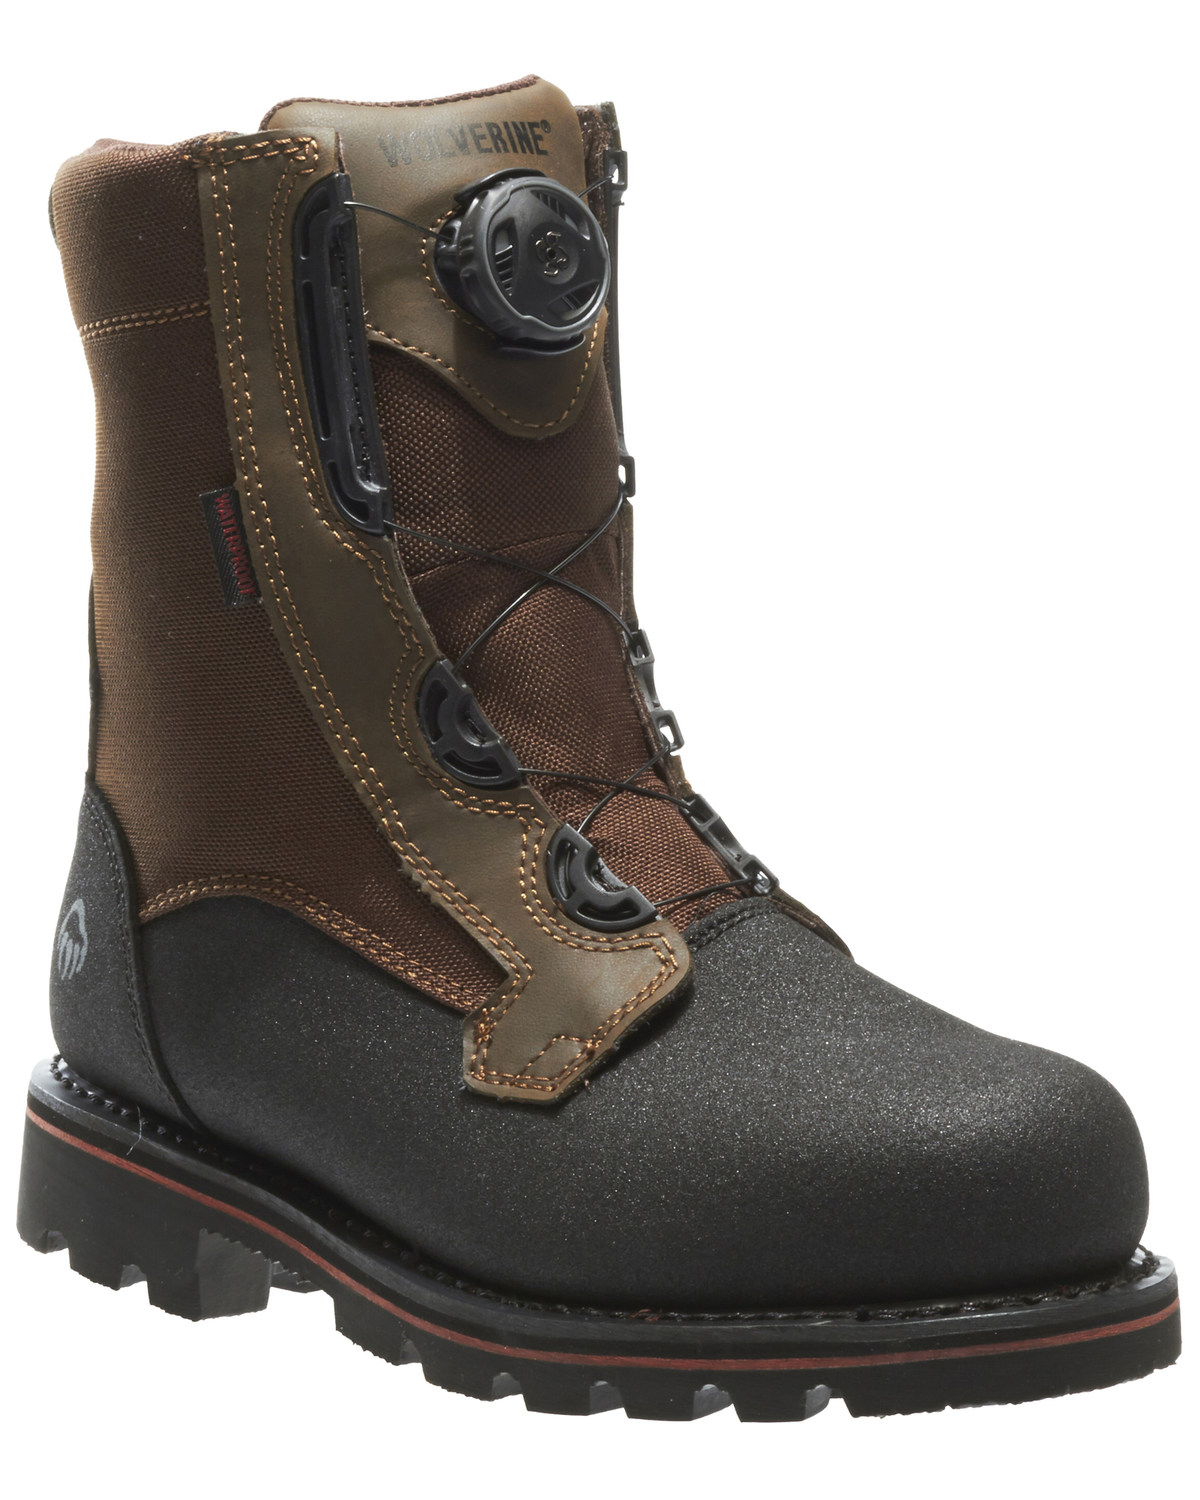 waterproof boots wolverine